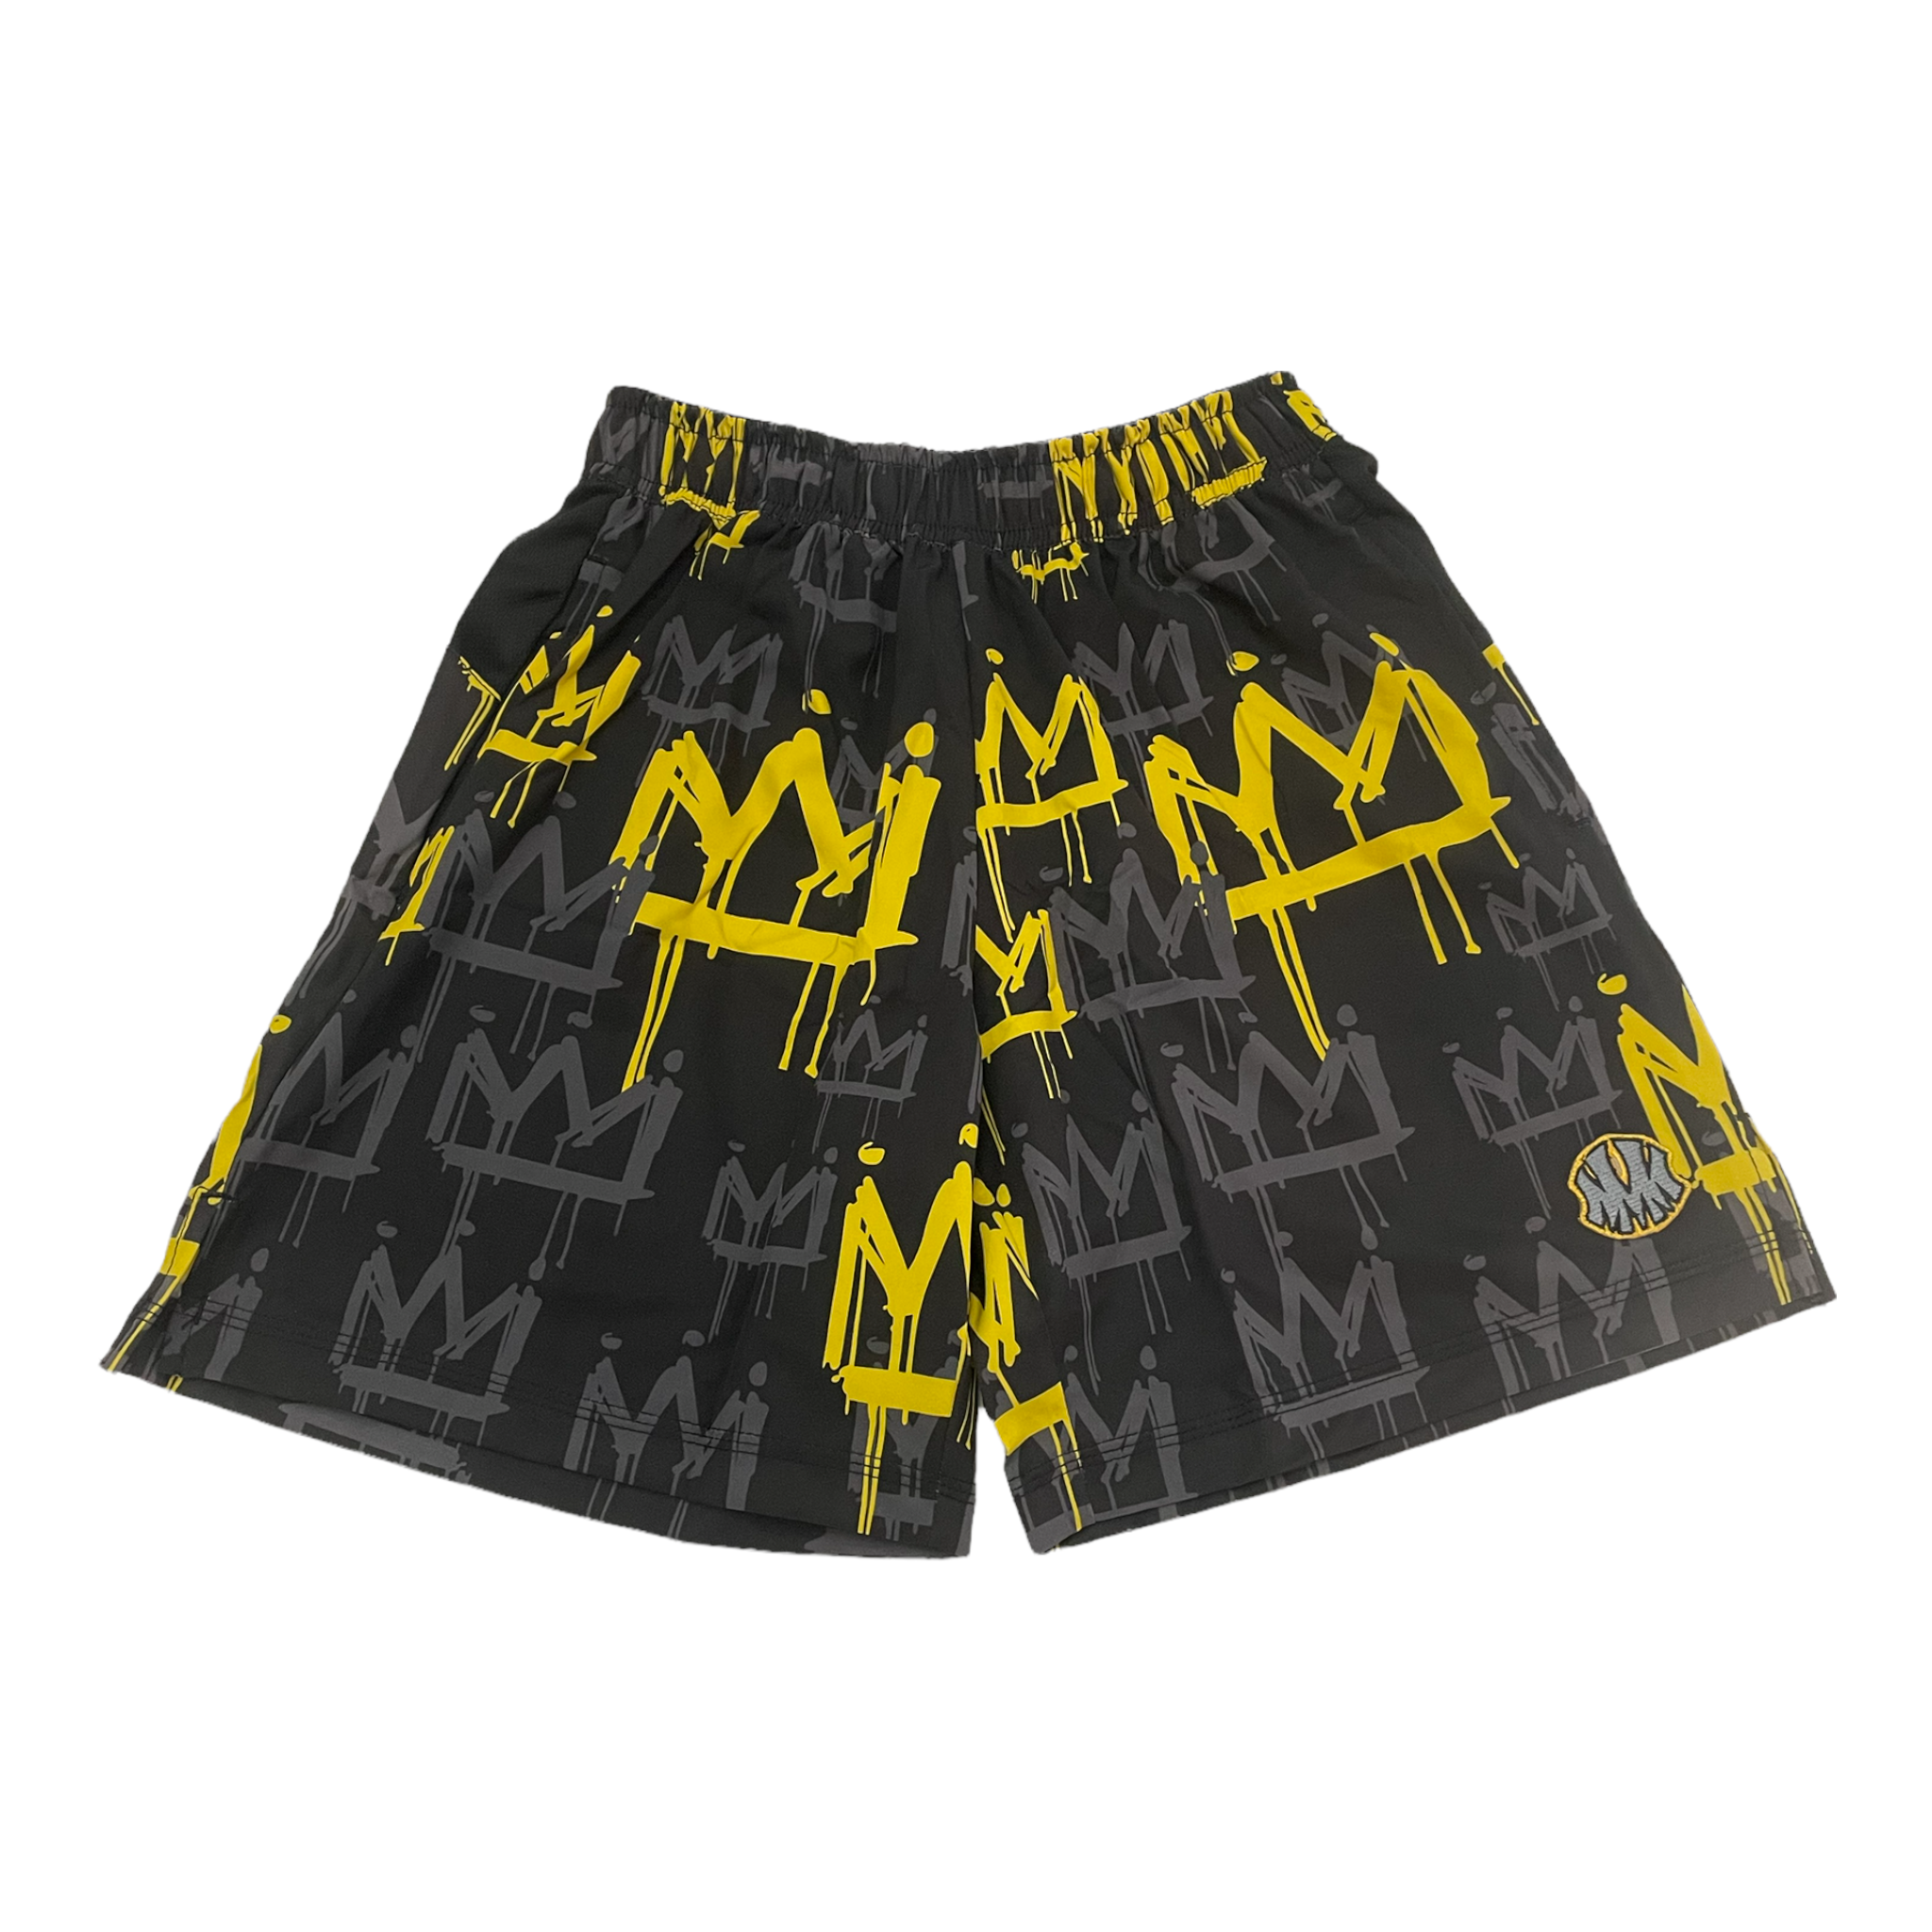 MVM “CROWN” Gym Shorts